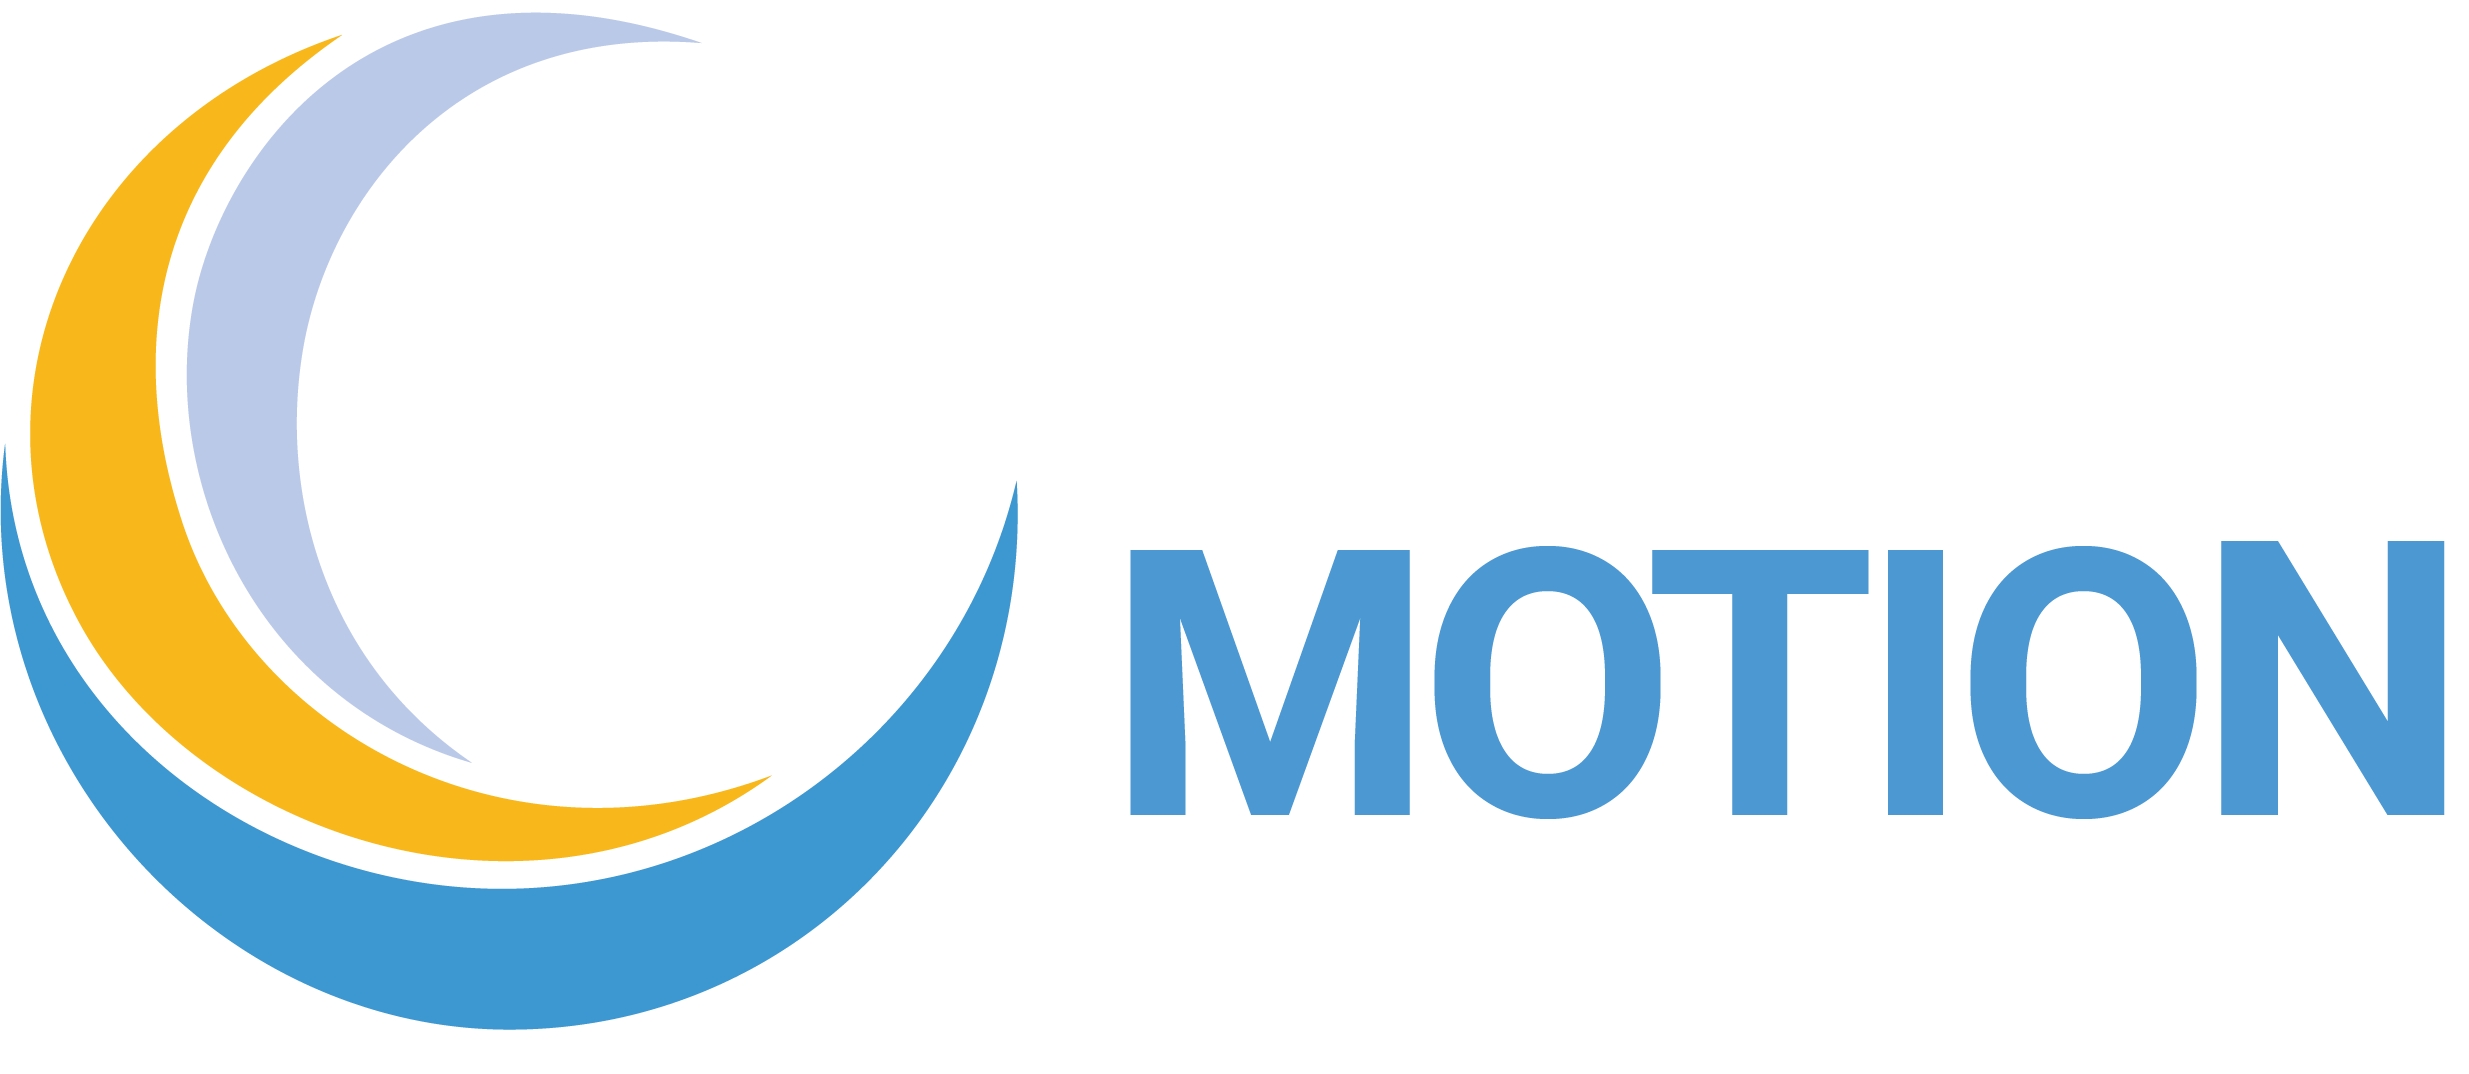 Hydro Motion Team